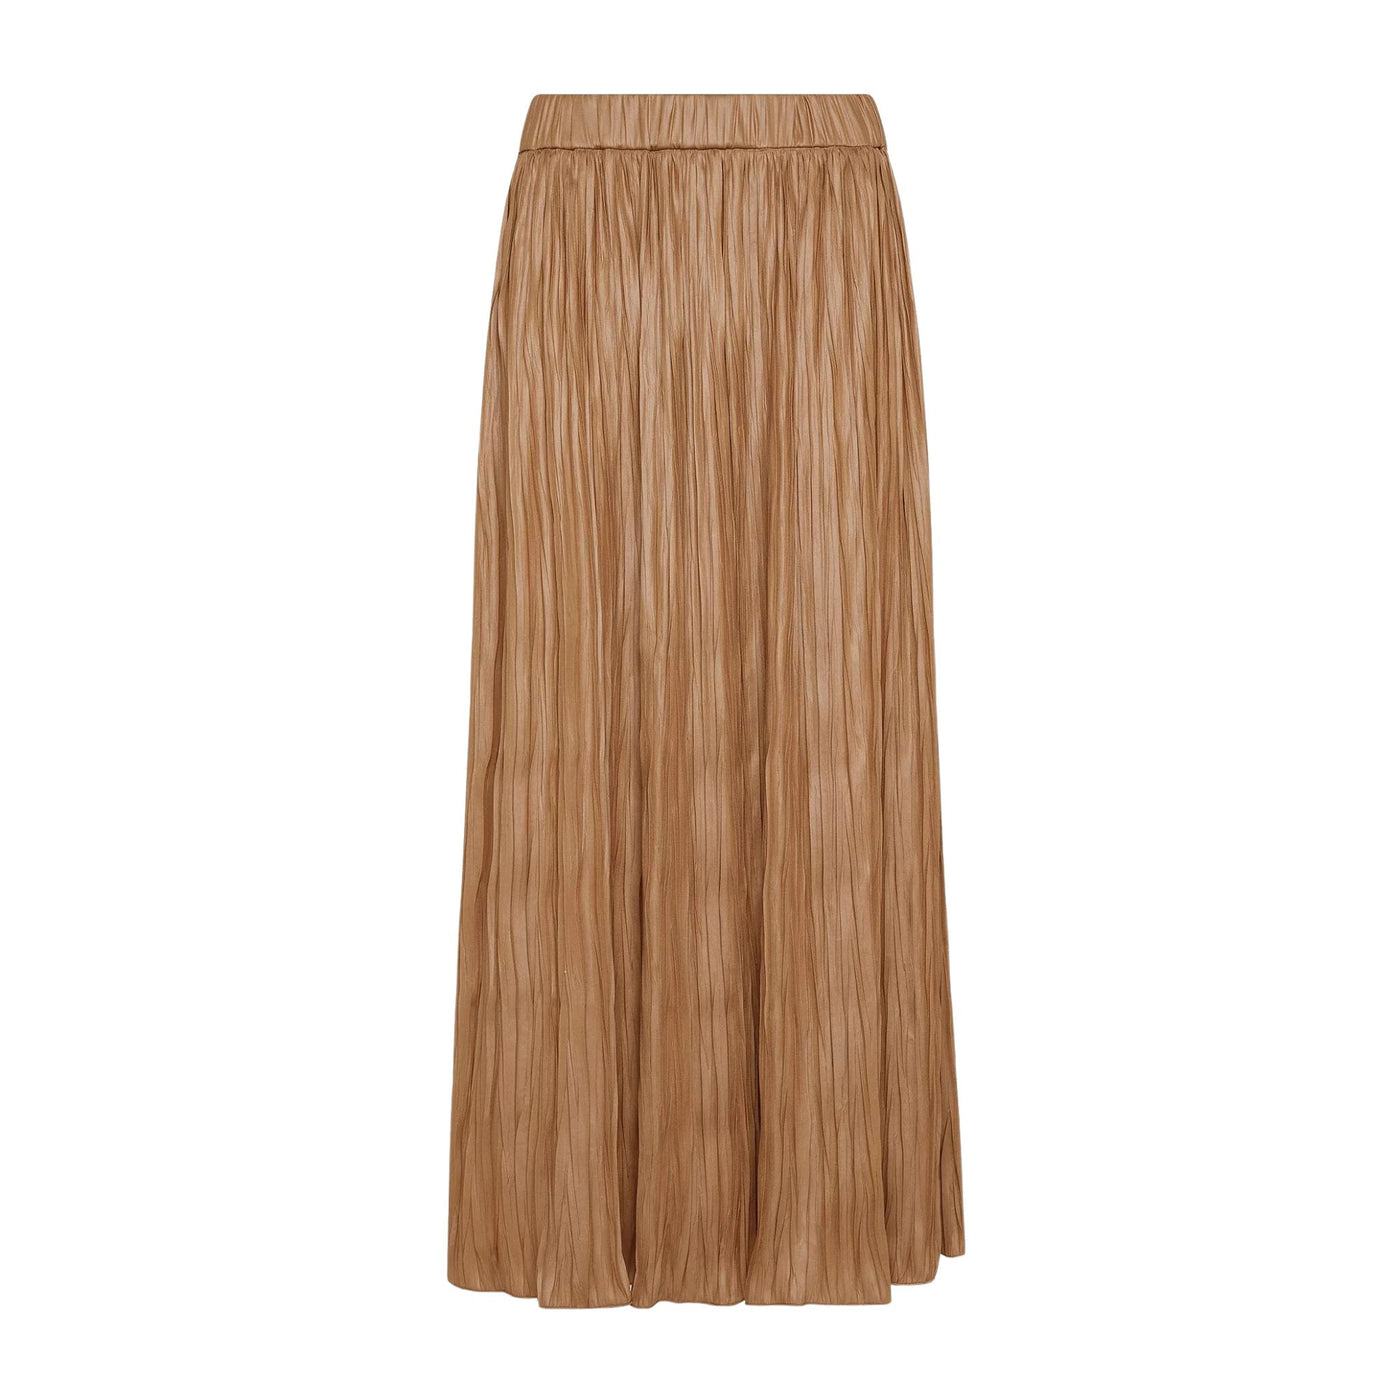 Women's pleated skirt